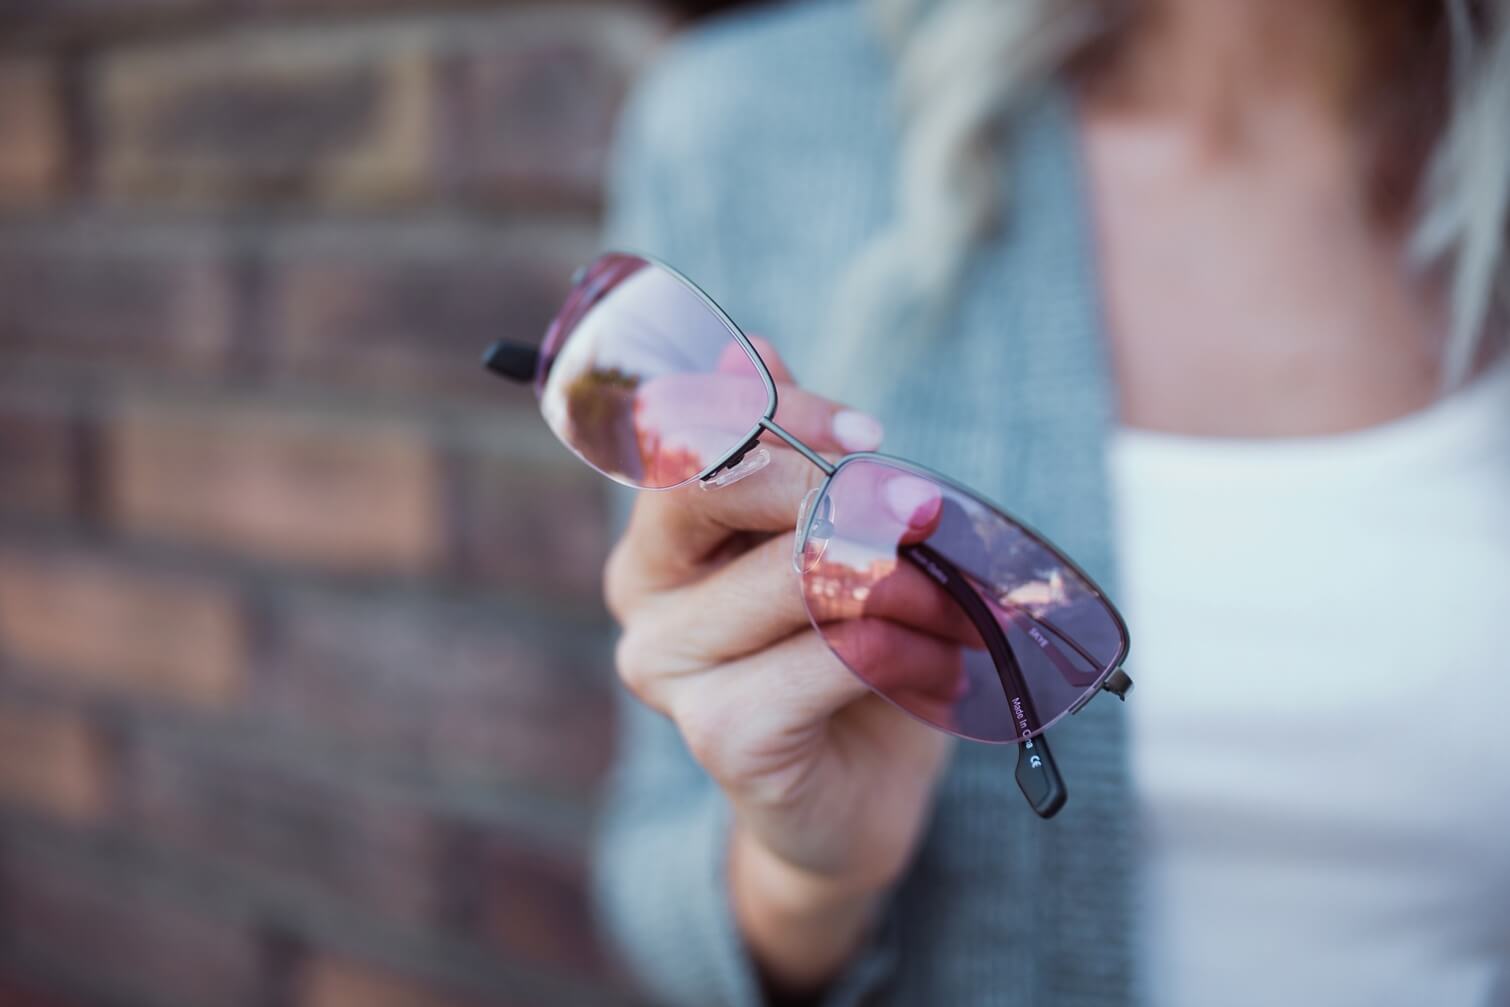 anti glare polarized sunglasses